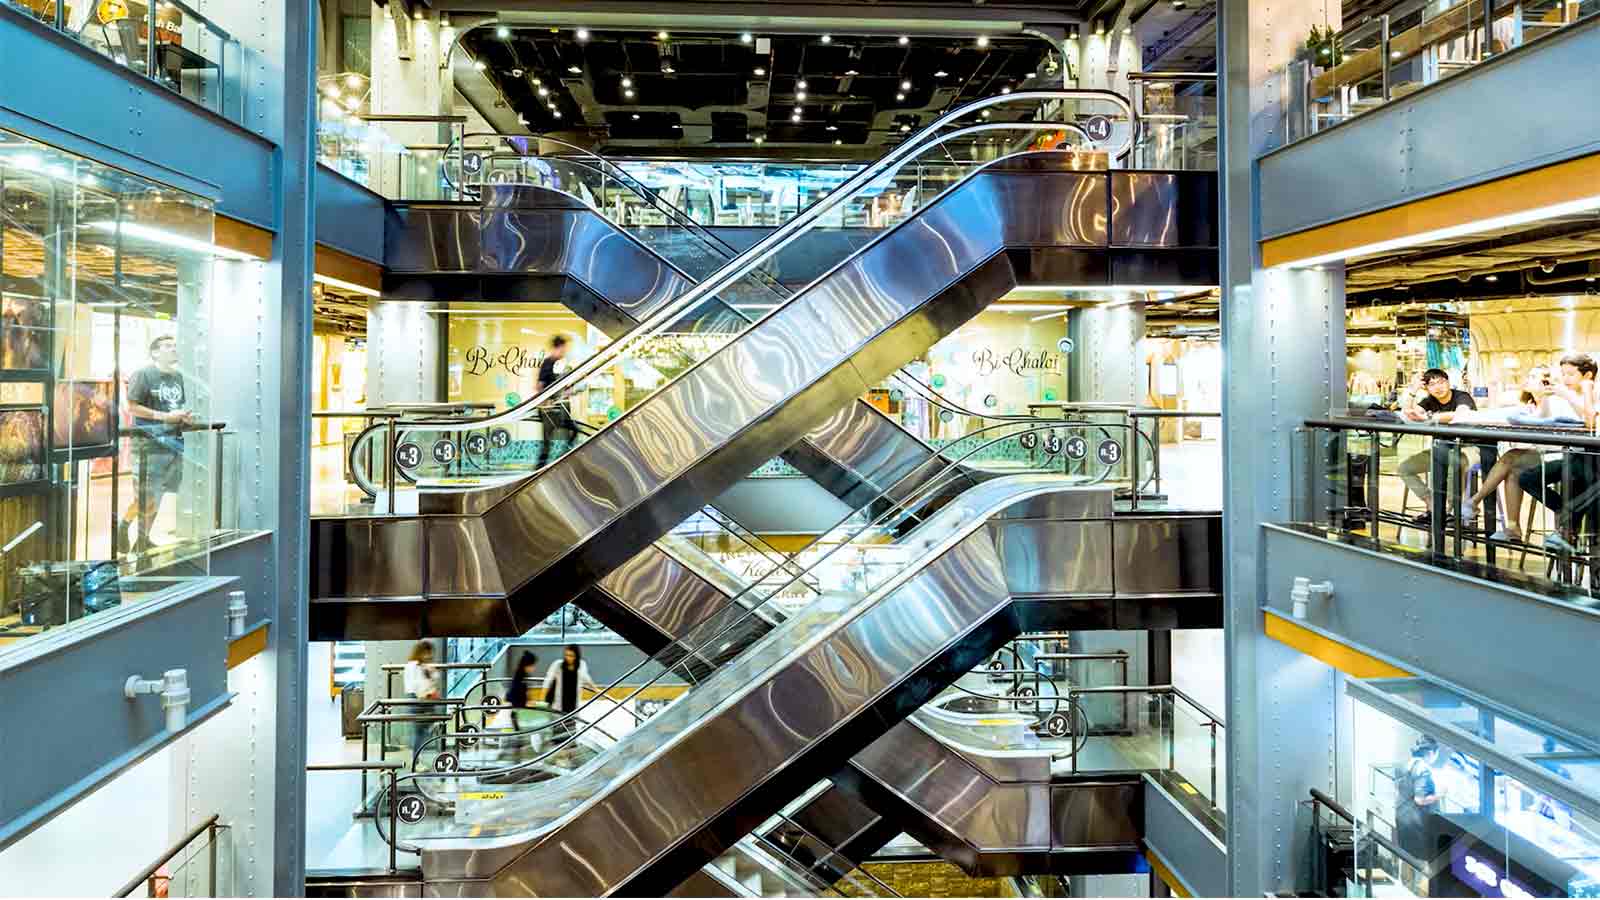 Modern escalators inside a building.